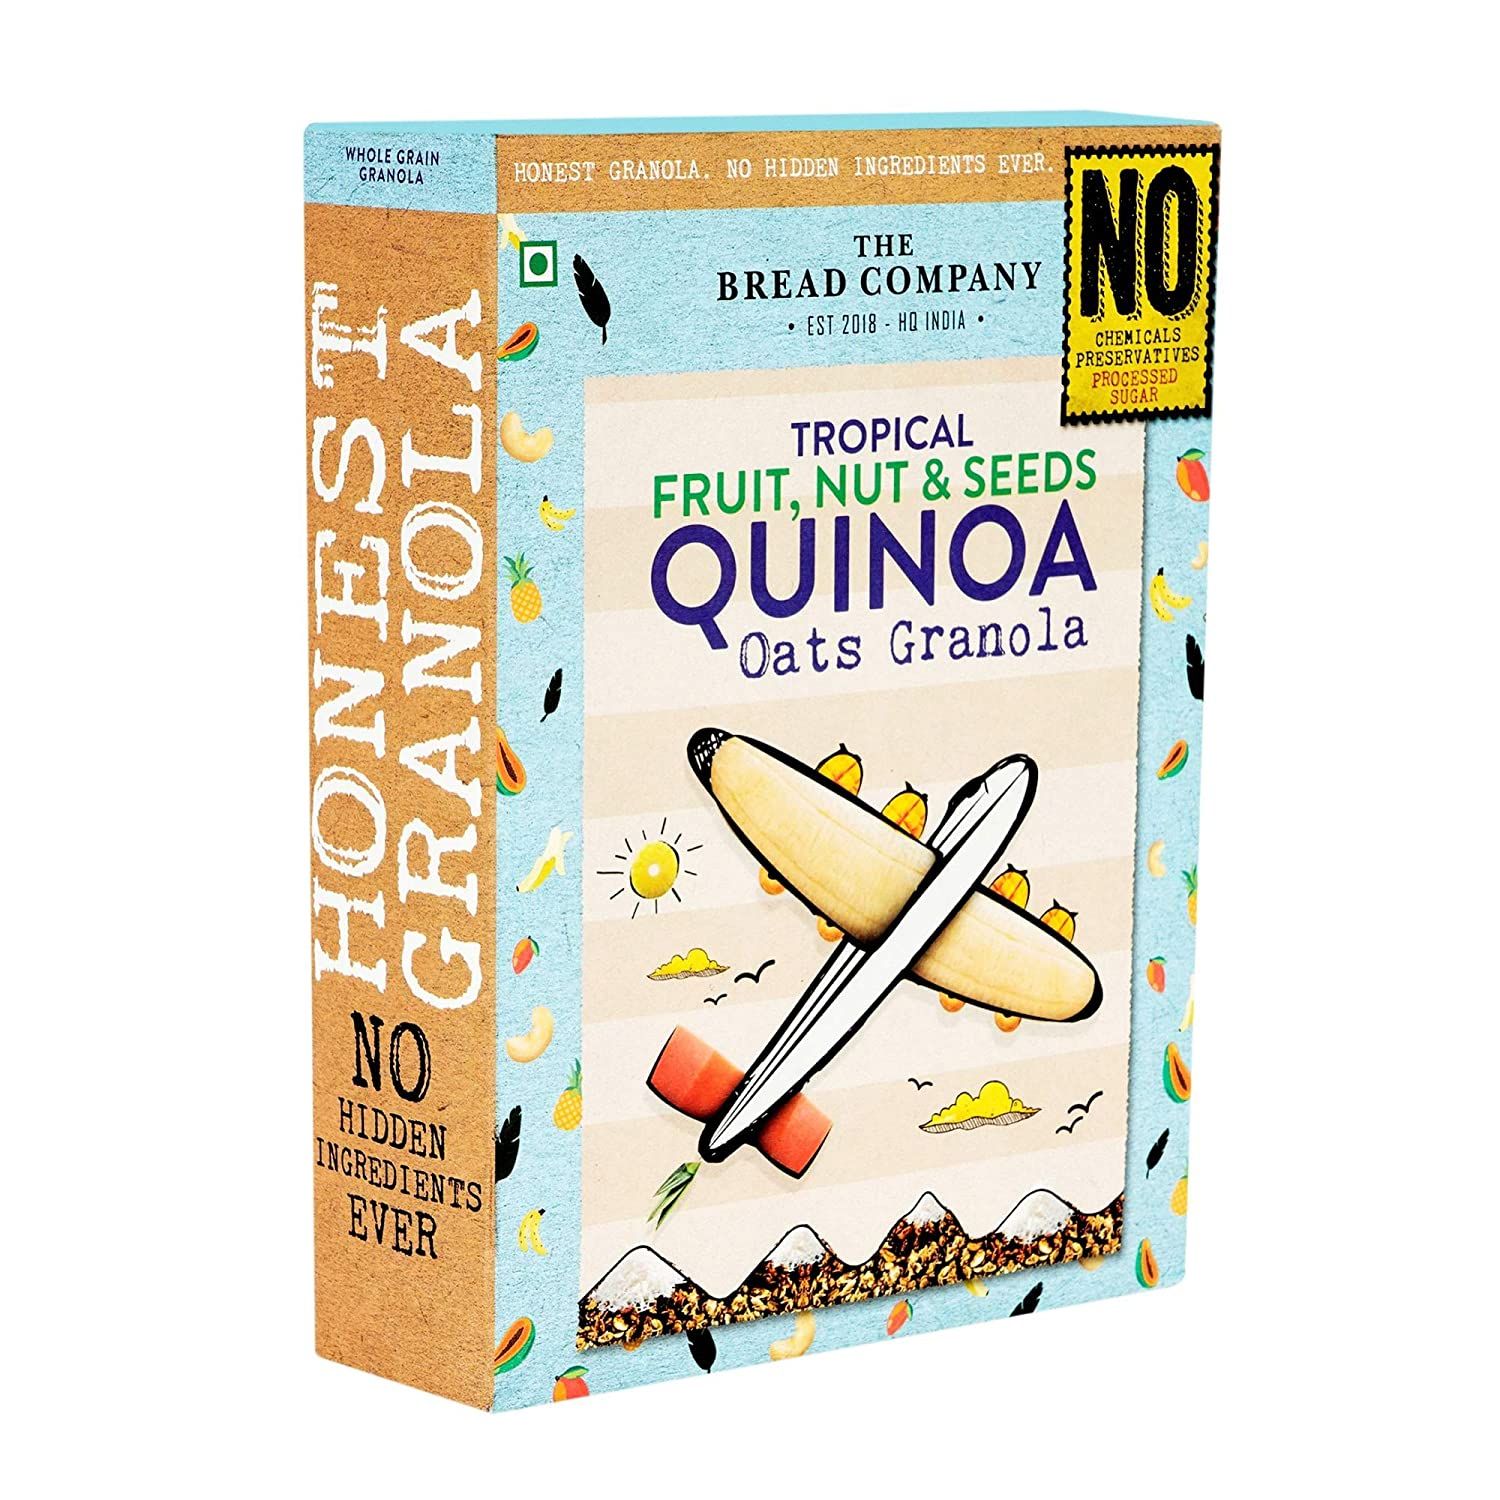 The Bread Company Tropical Fruit Nut & Seeds Quinoa Oats Granola Image